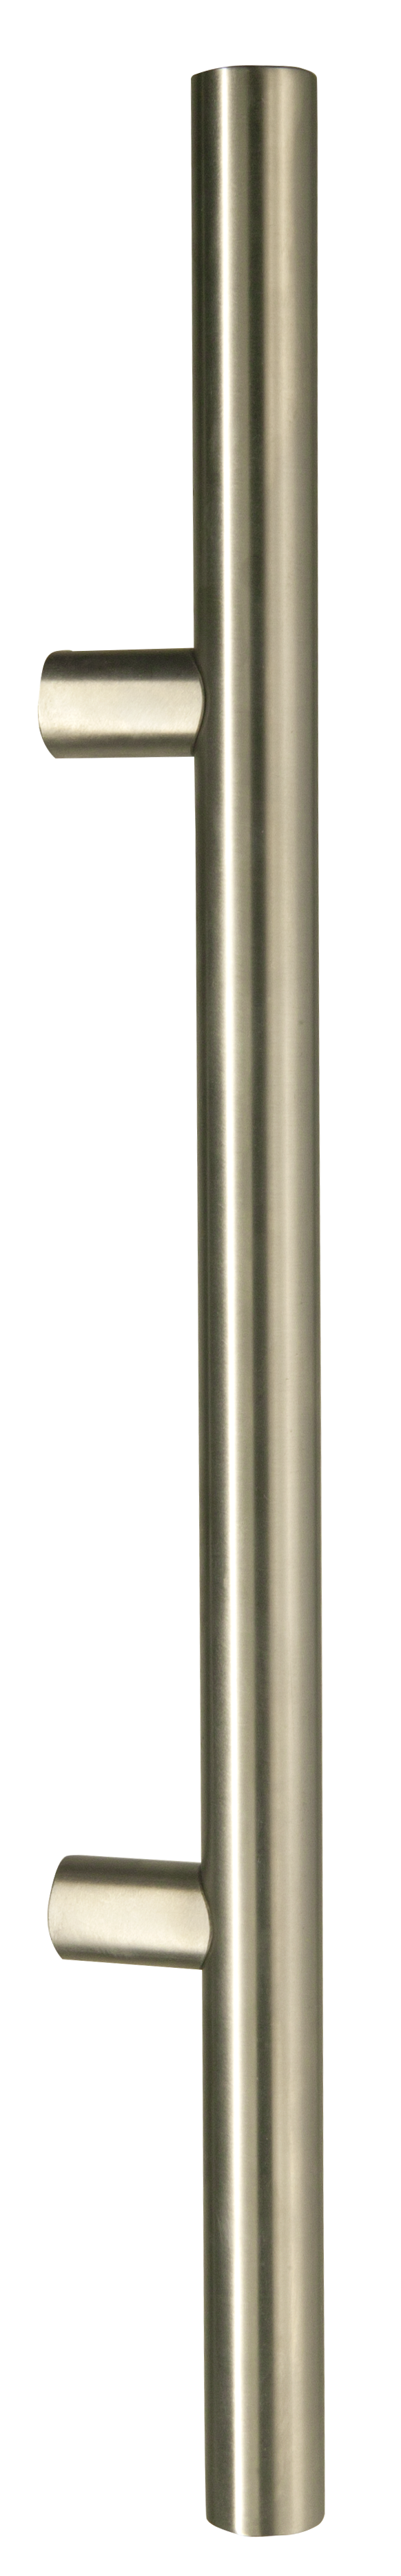 Manillon redondeo diametro 25 longitud 500mm ejes:250mm